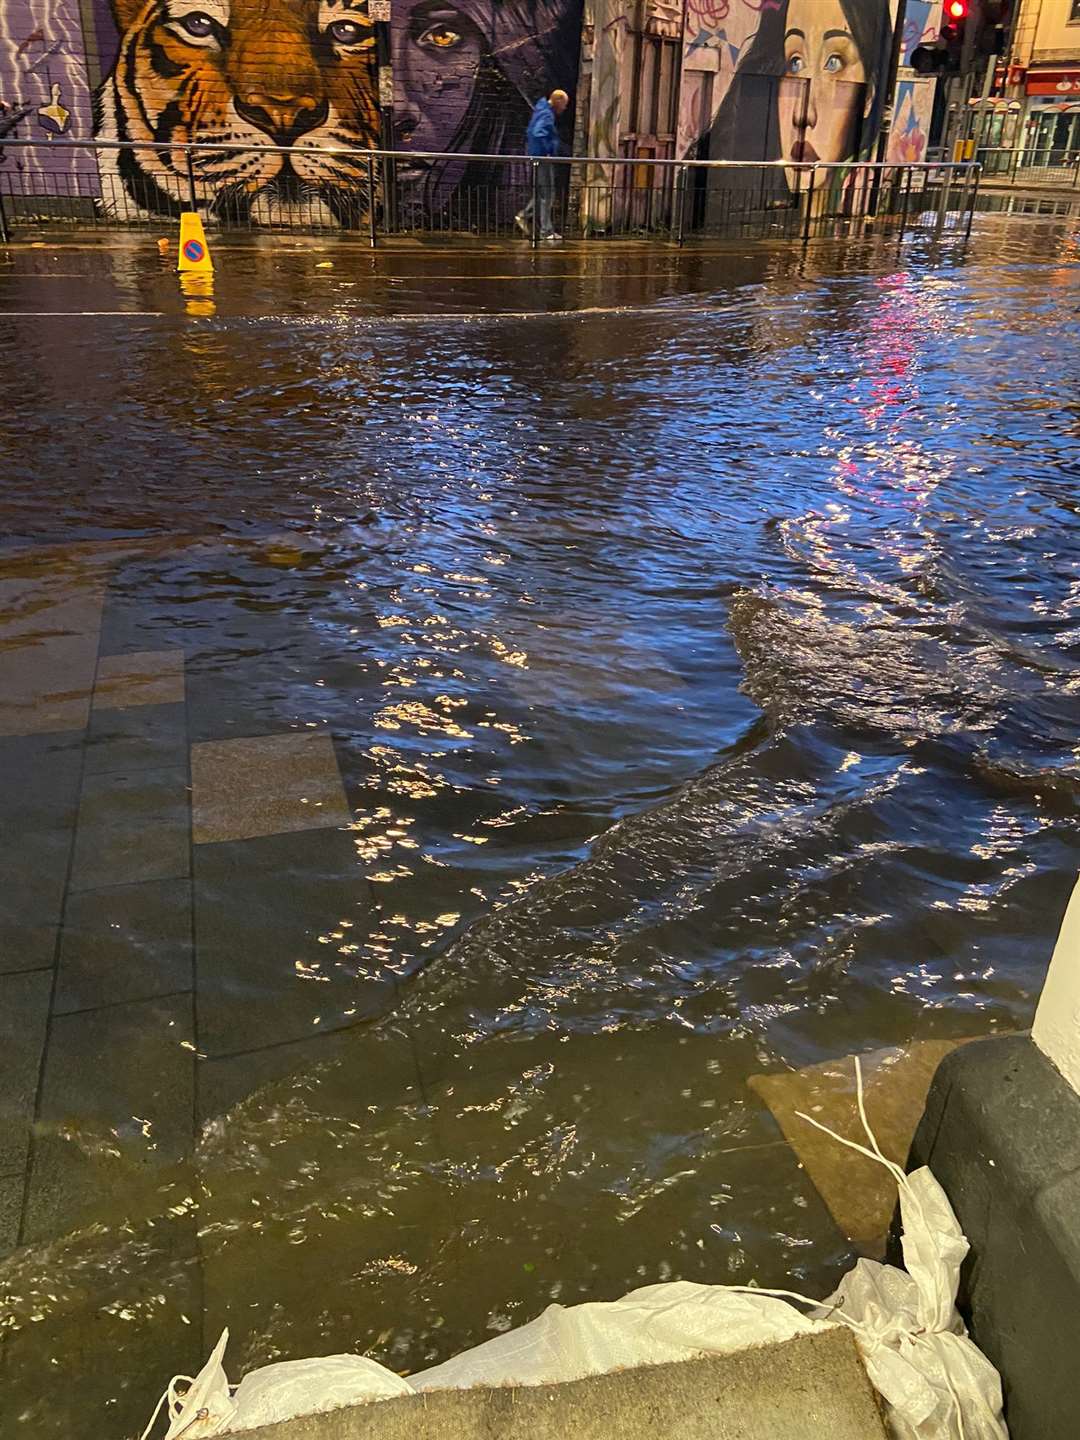 The flooding in Downpatrick on Wednesday night (Ciara Douglas/PA)